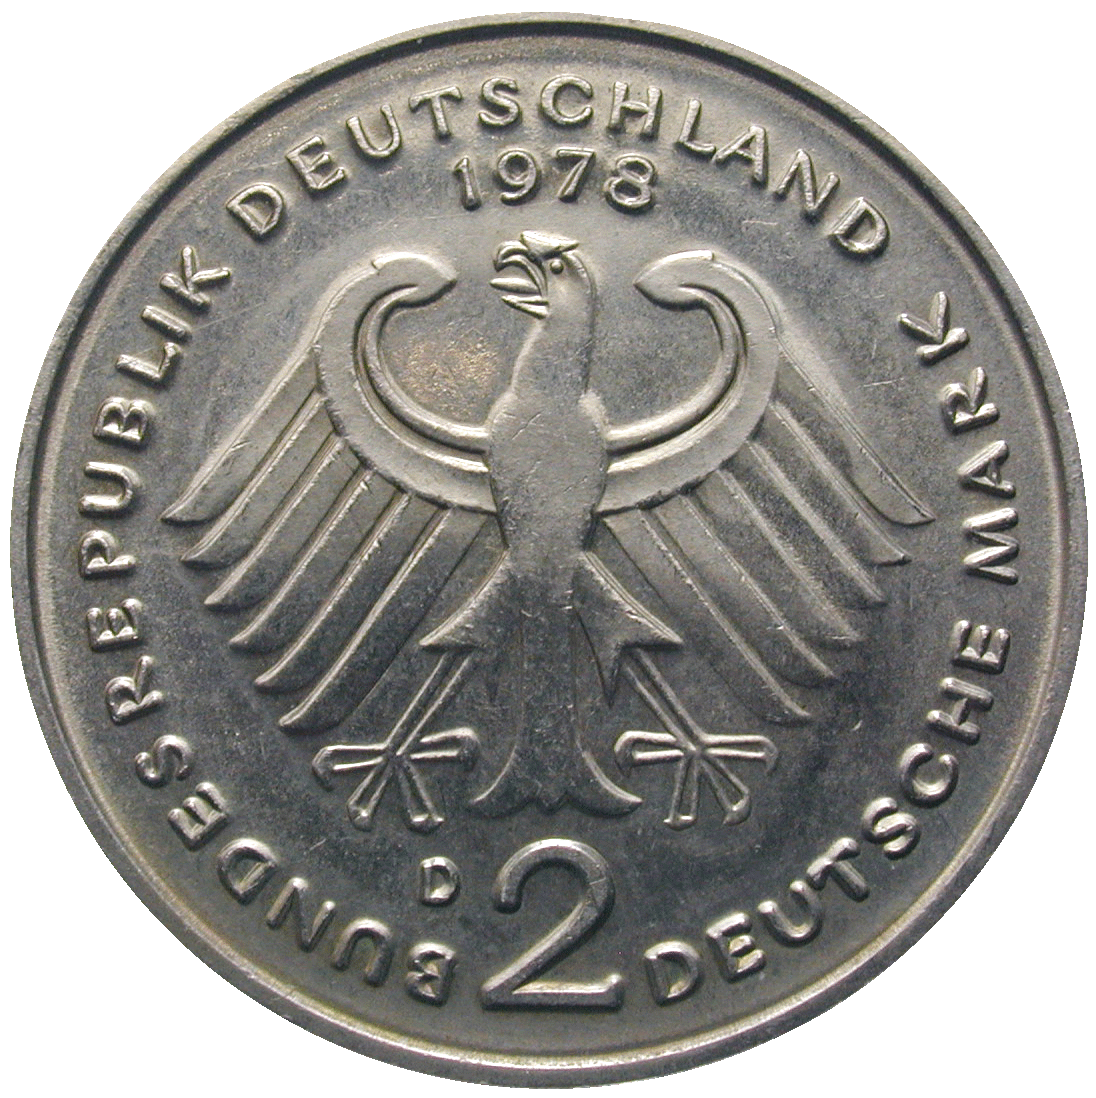 Federal Republic of Germany, 2 Deutsche Mark 1978 (obverse)